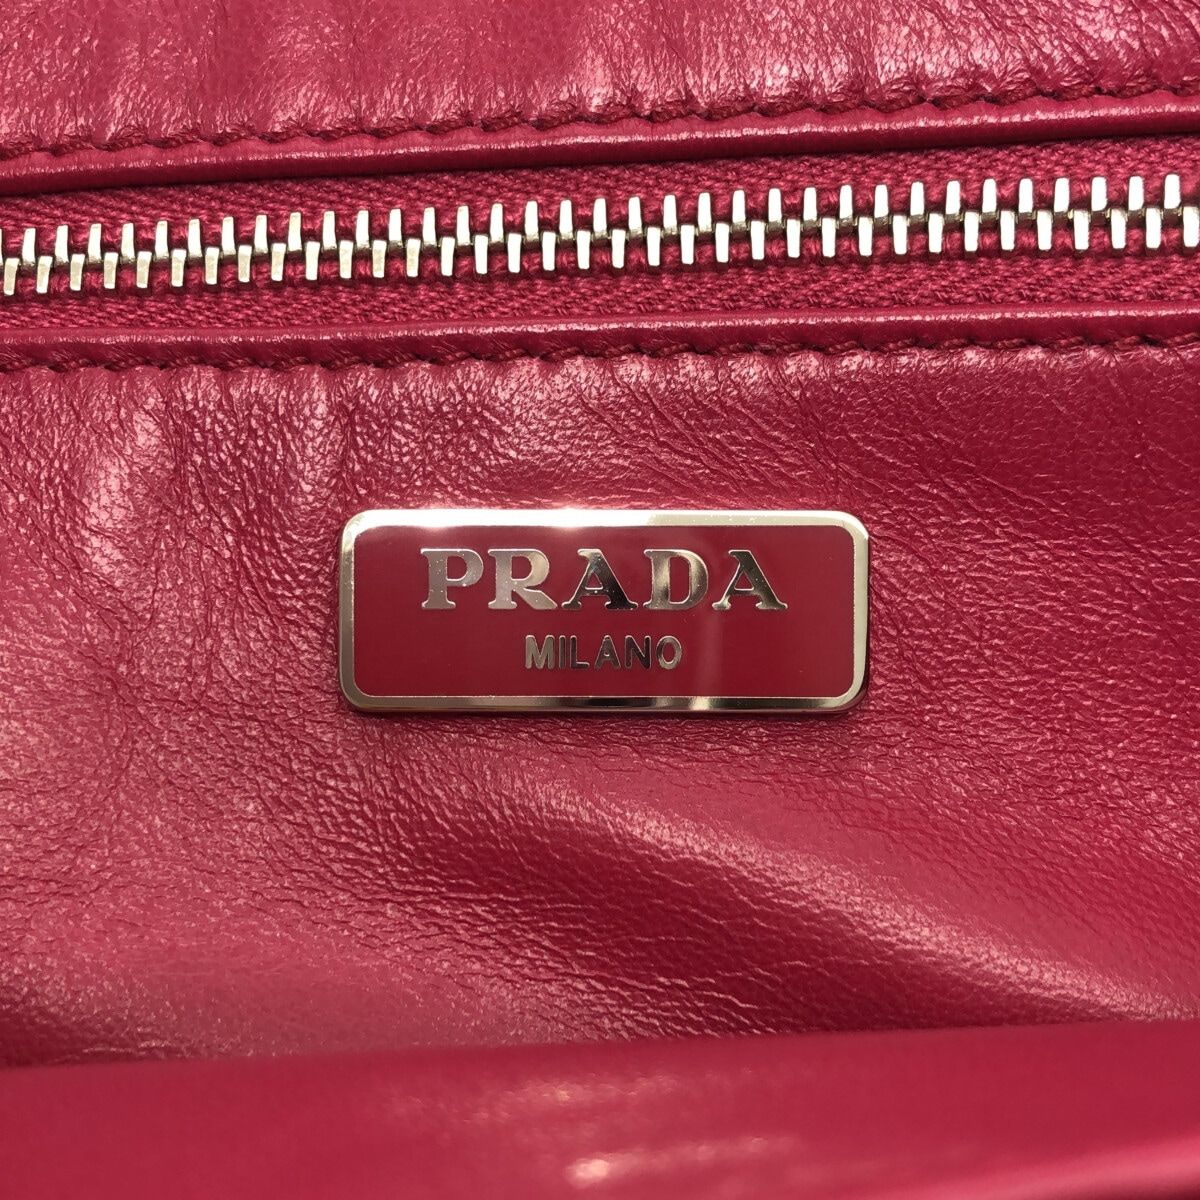 PRADA(プラダ) クラッチバッグ美品 - ピンク レザー - メルカリ